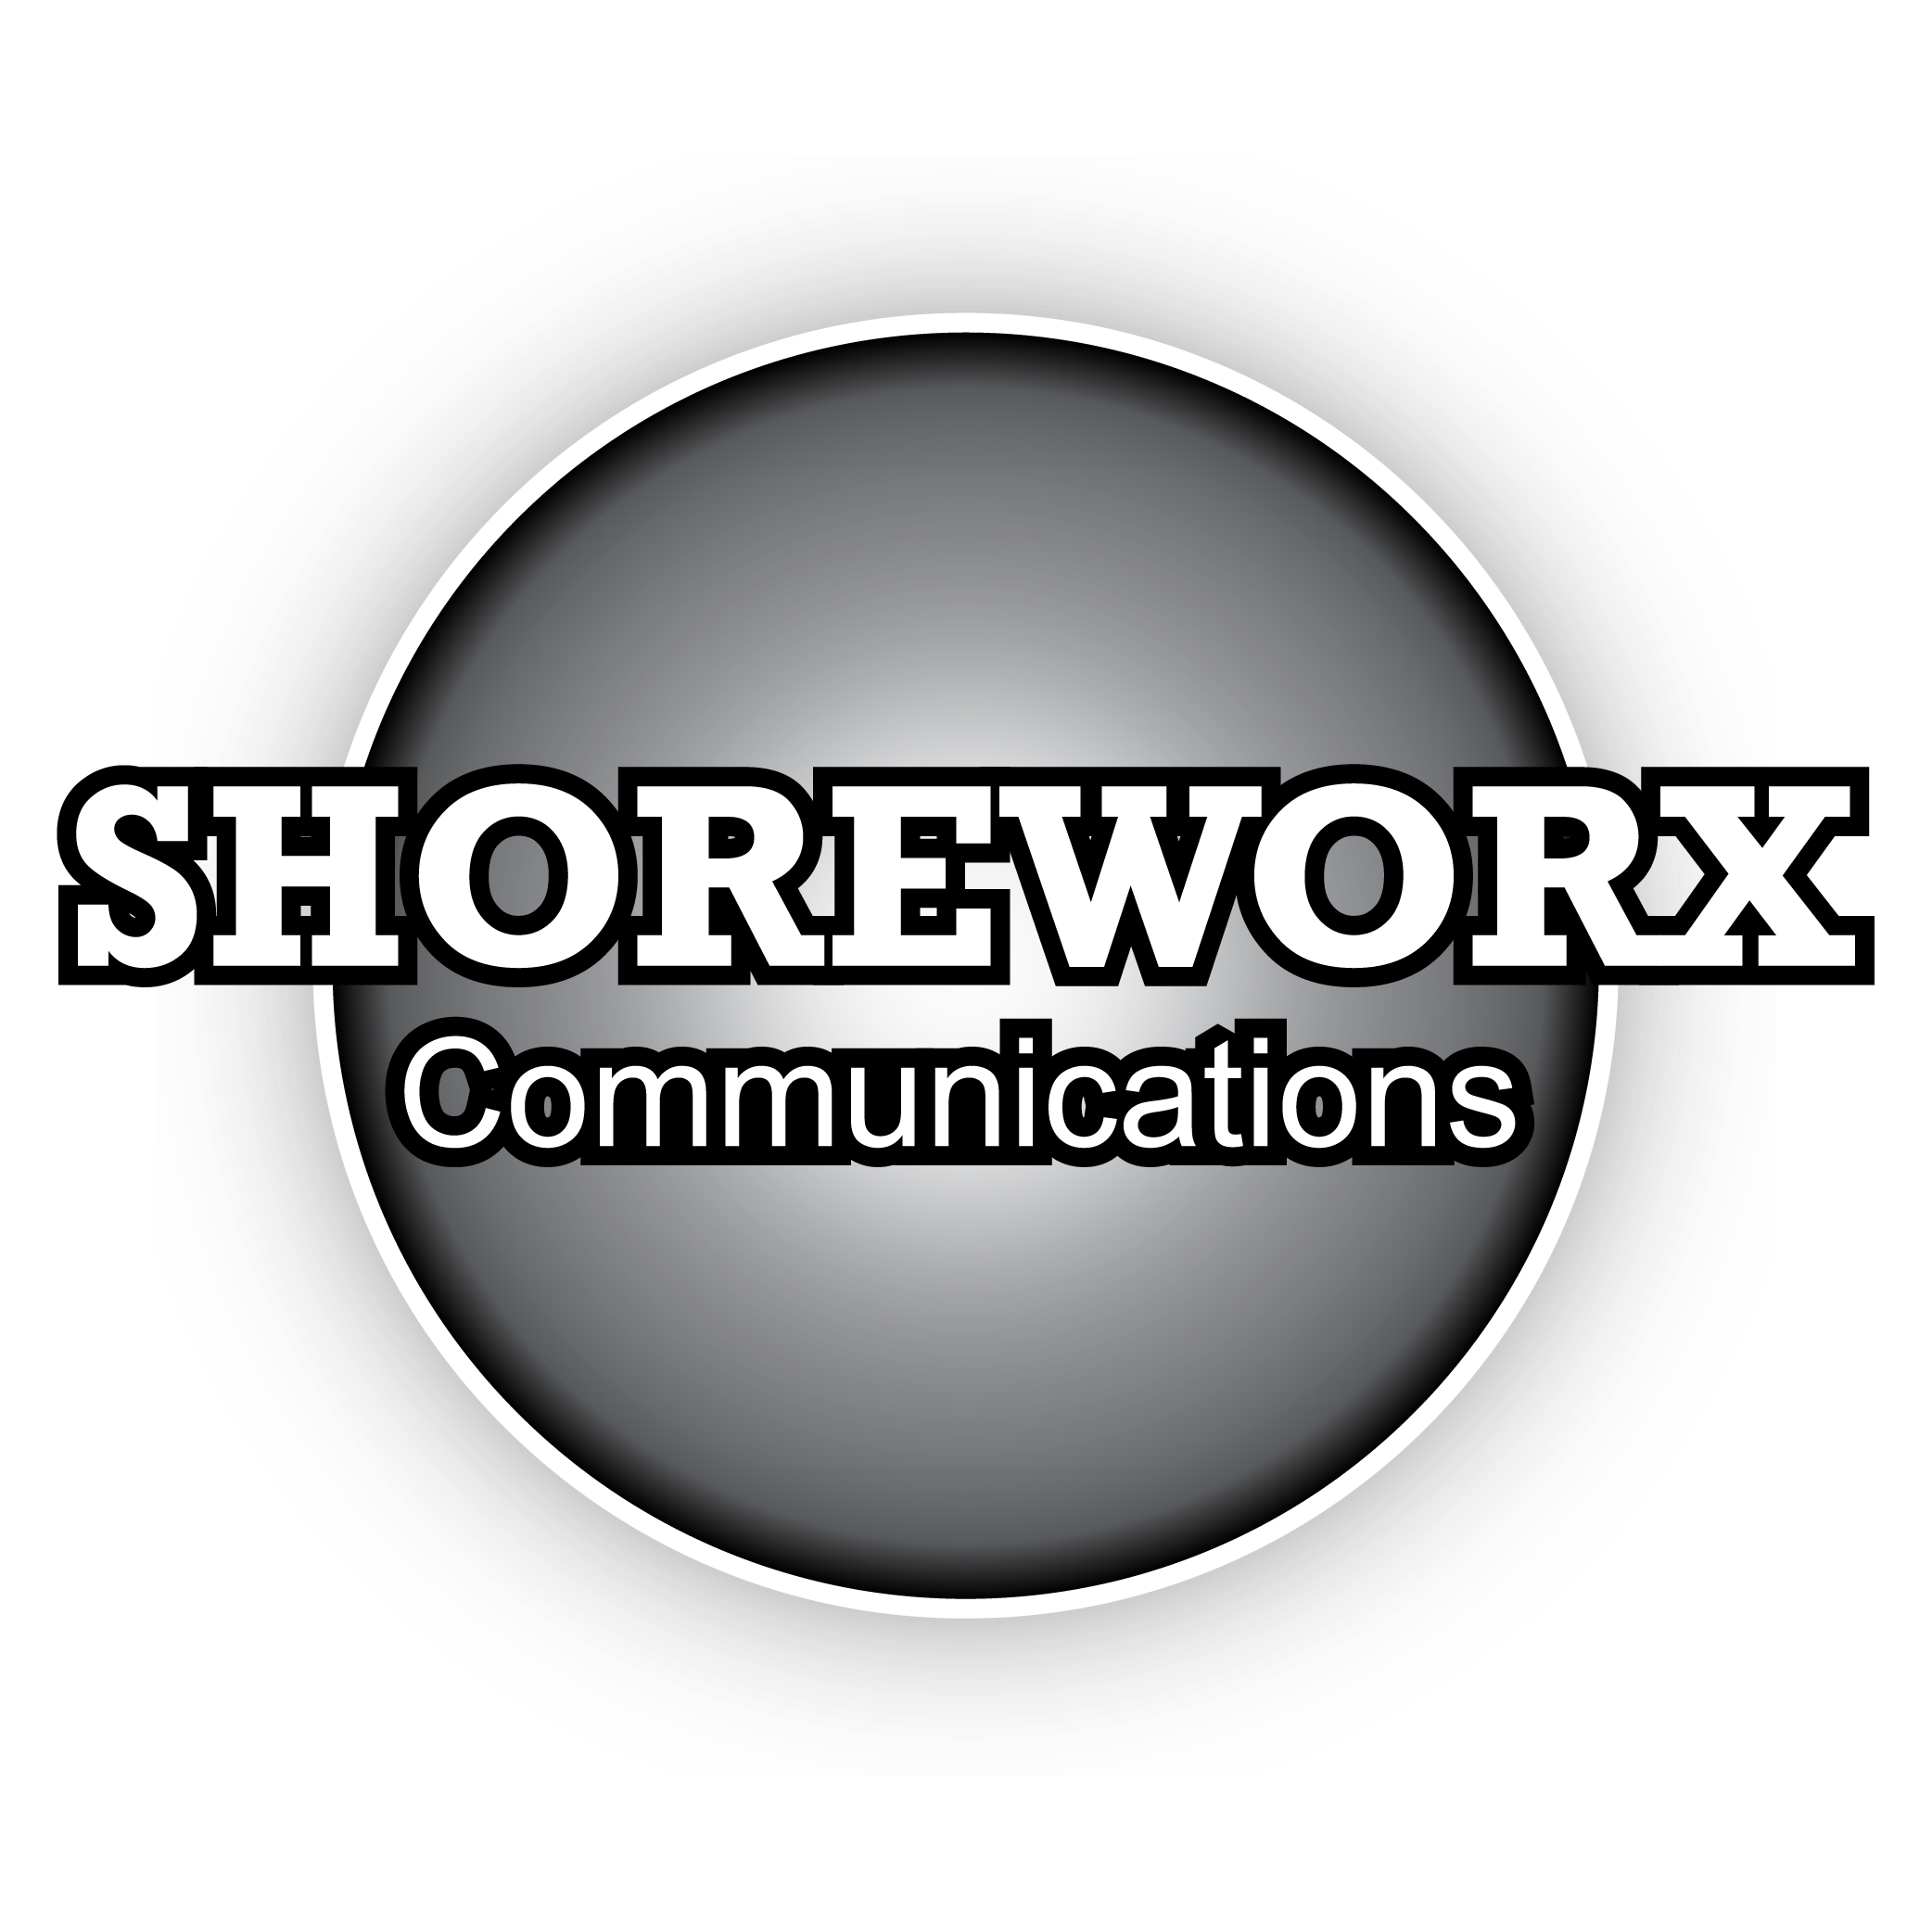 Shoreworx Communications